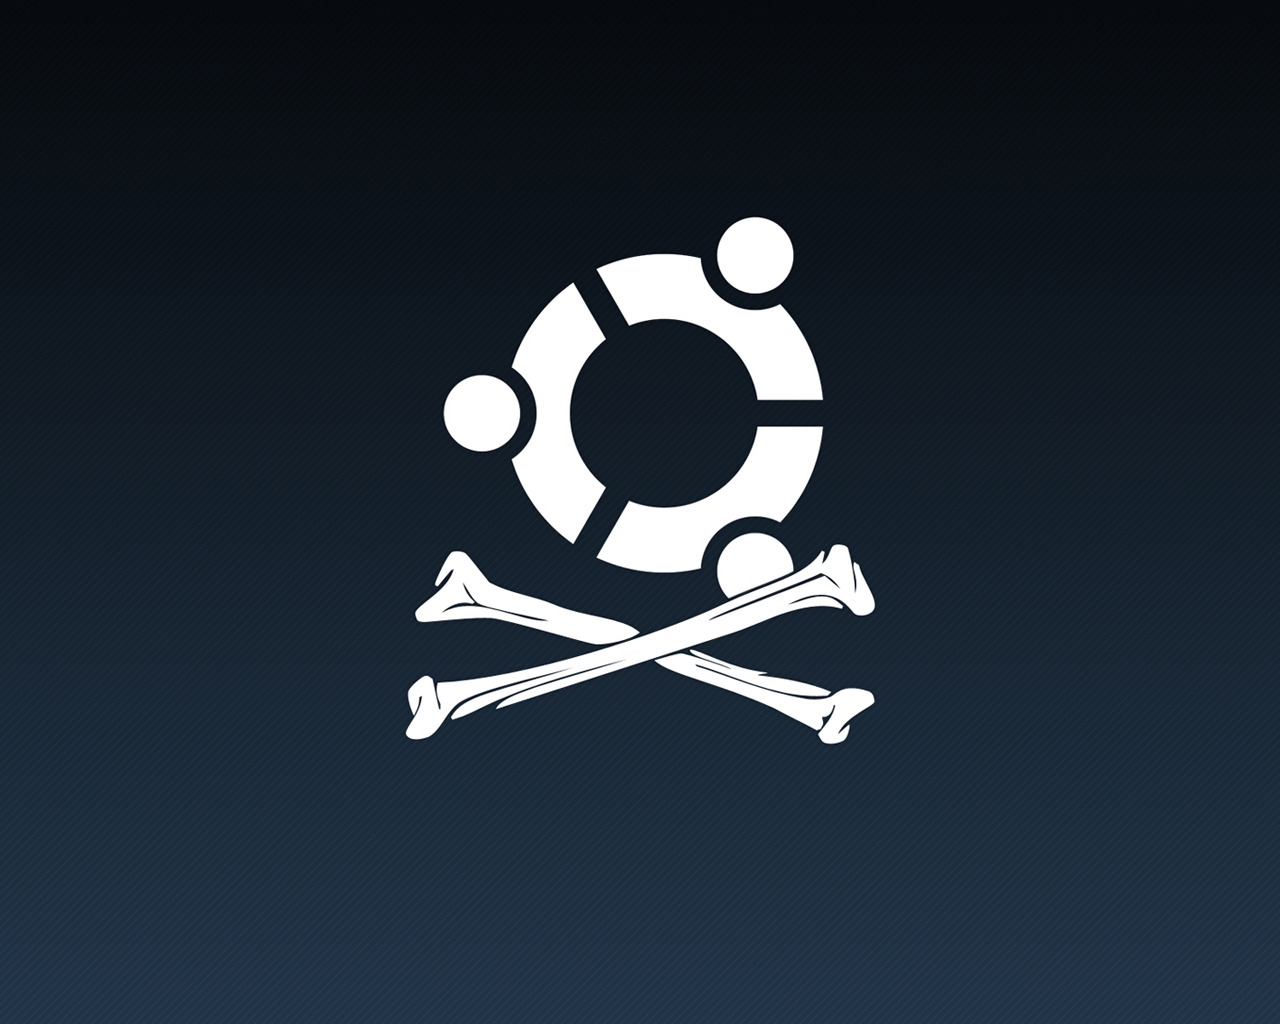 Pirate Ubuntu for 1280 x 1024 resolution